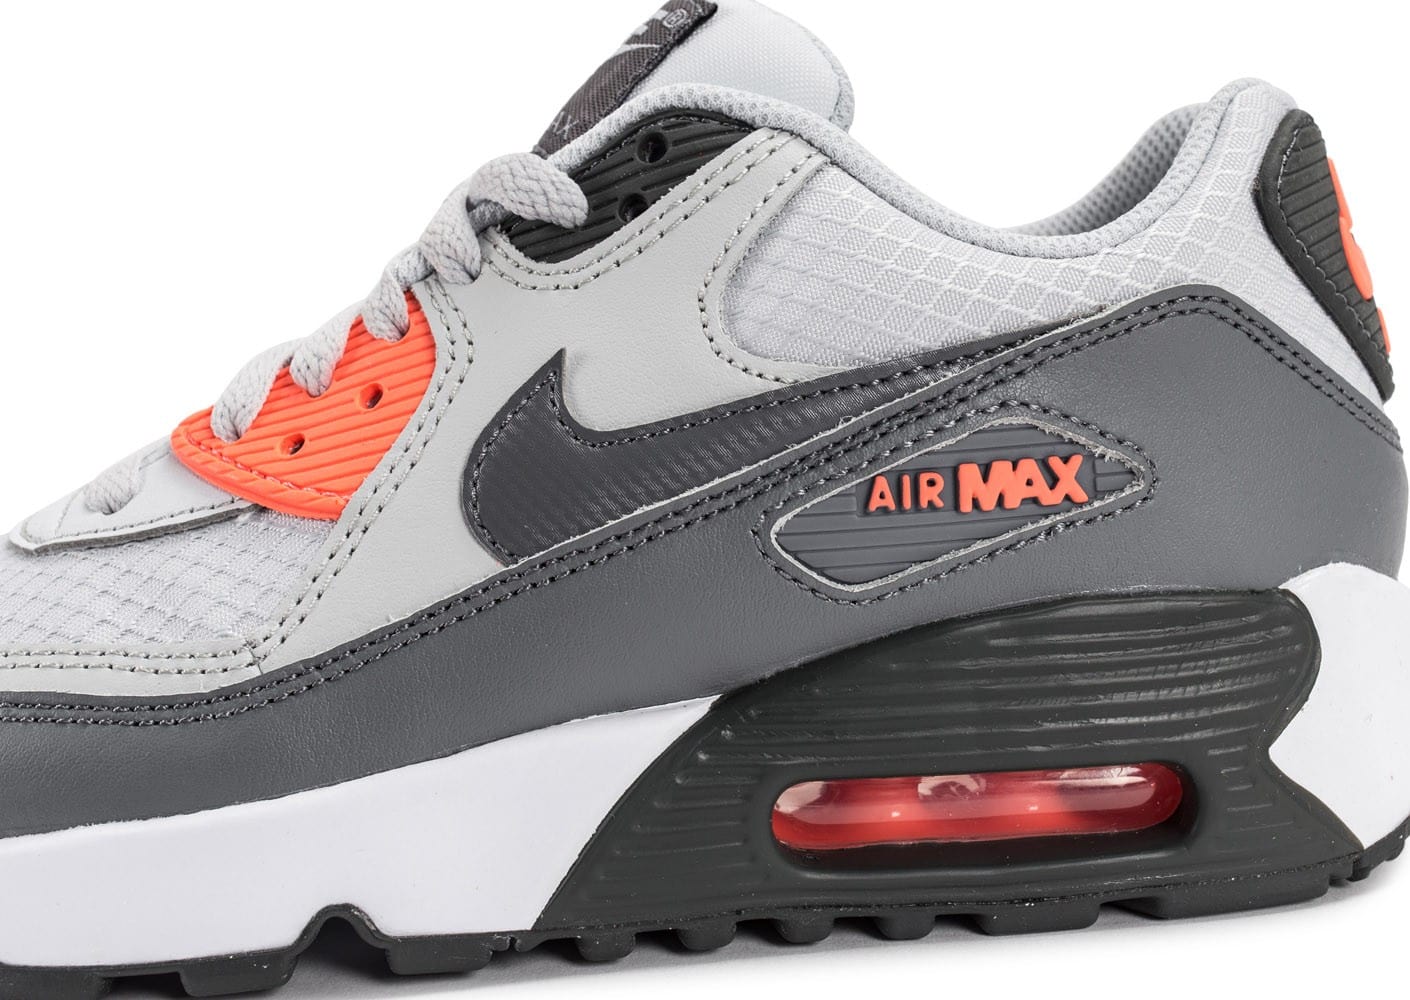 Nike Air Max 90 307793 002 Black Juniors Size 6y for eBay